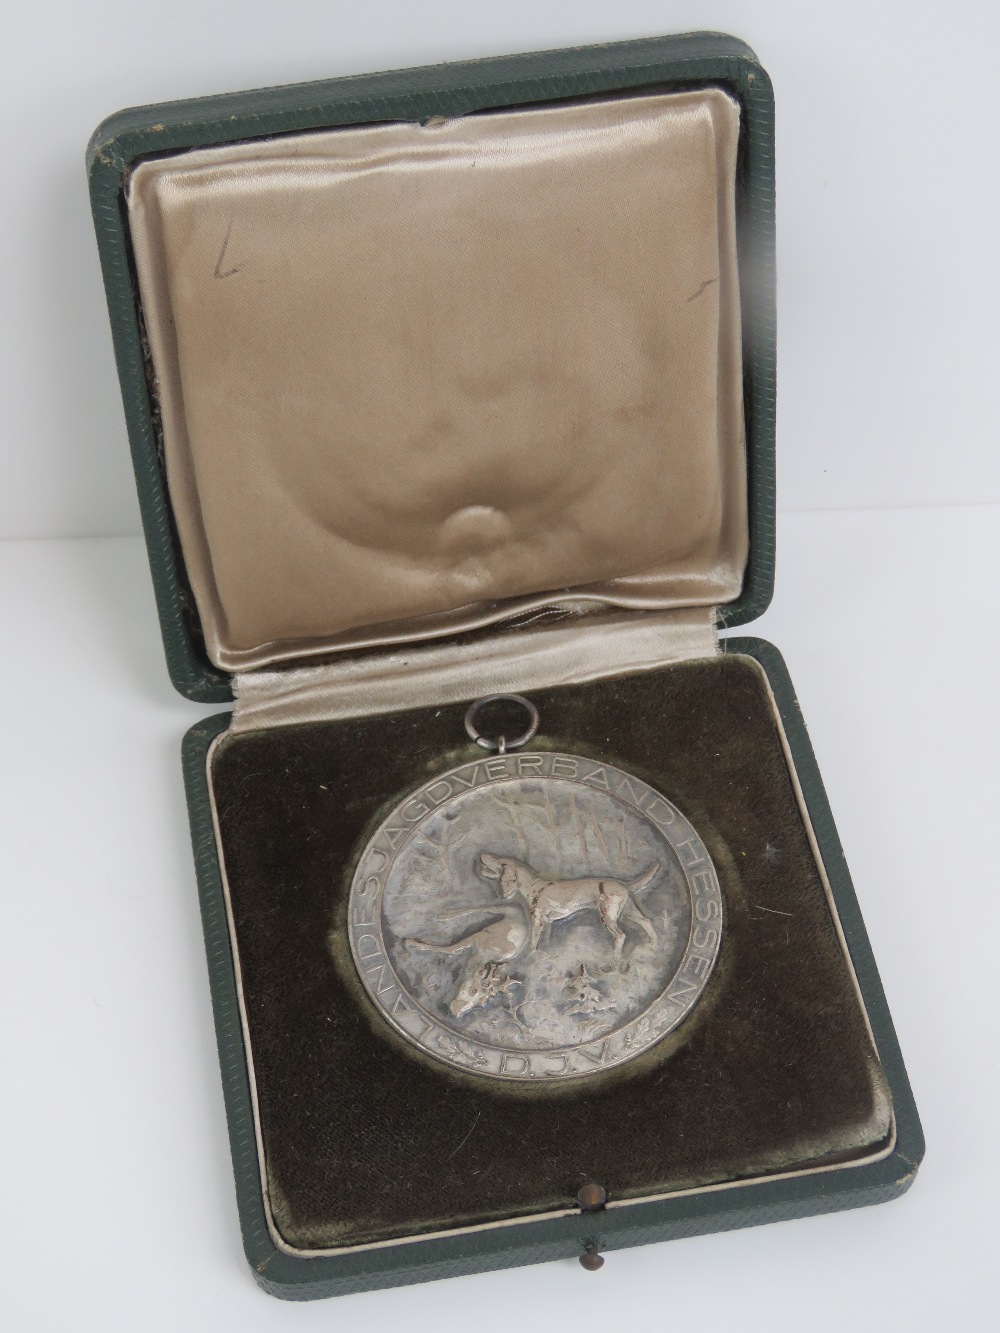 A German hunting award medal in box. - Image 3 of 3